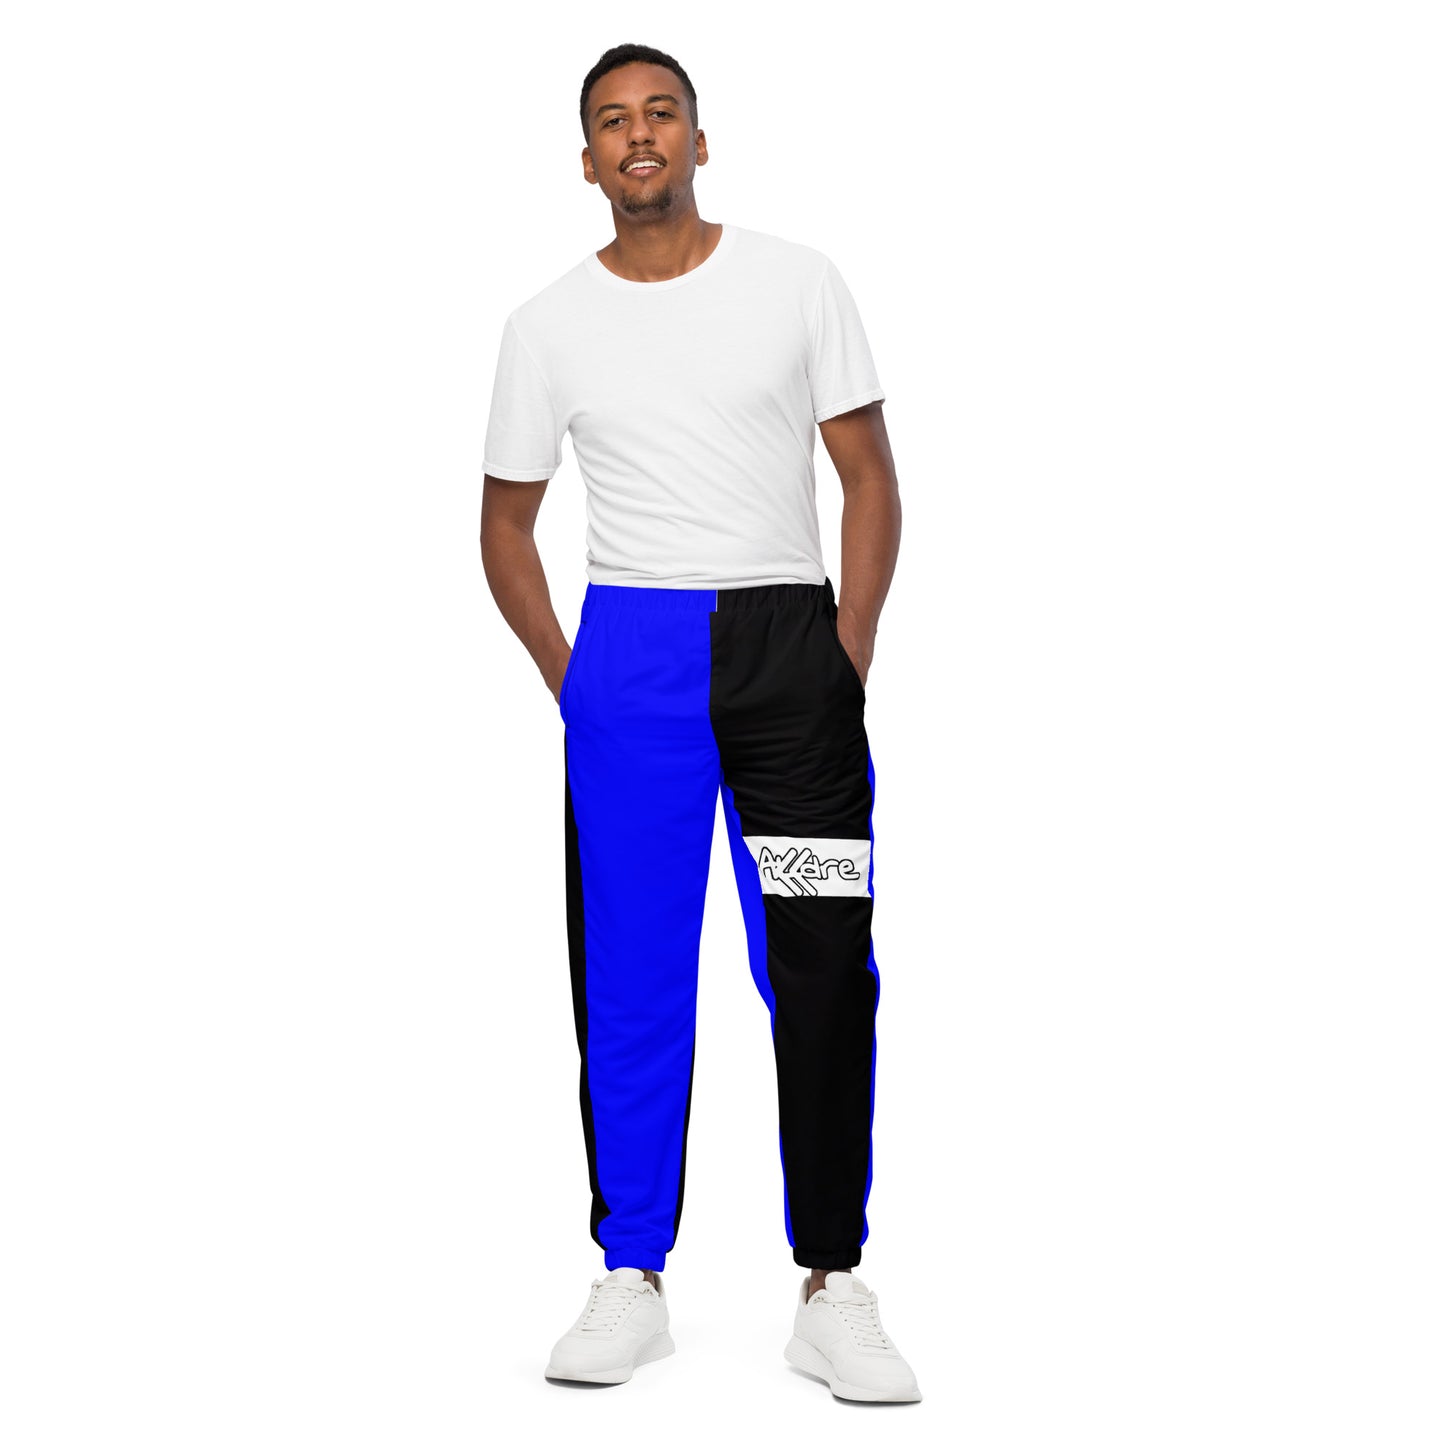 Unisex Black & Blue Track Pants